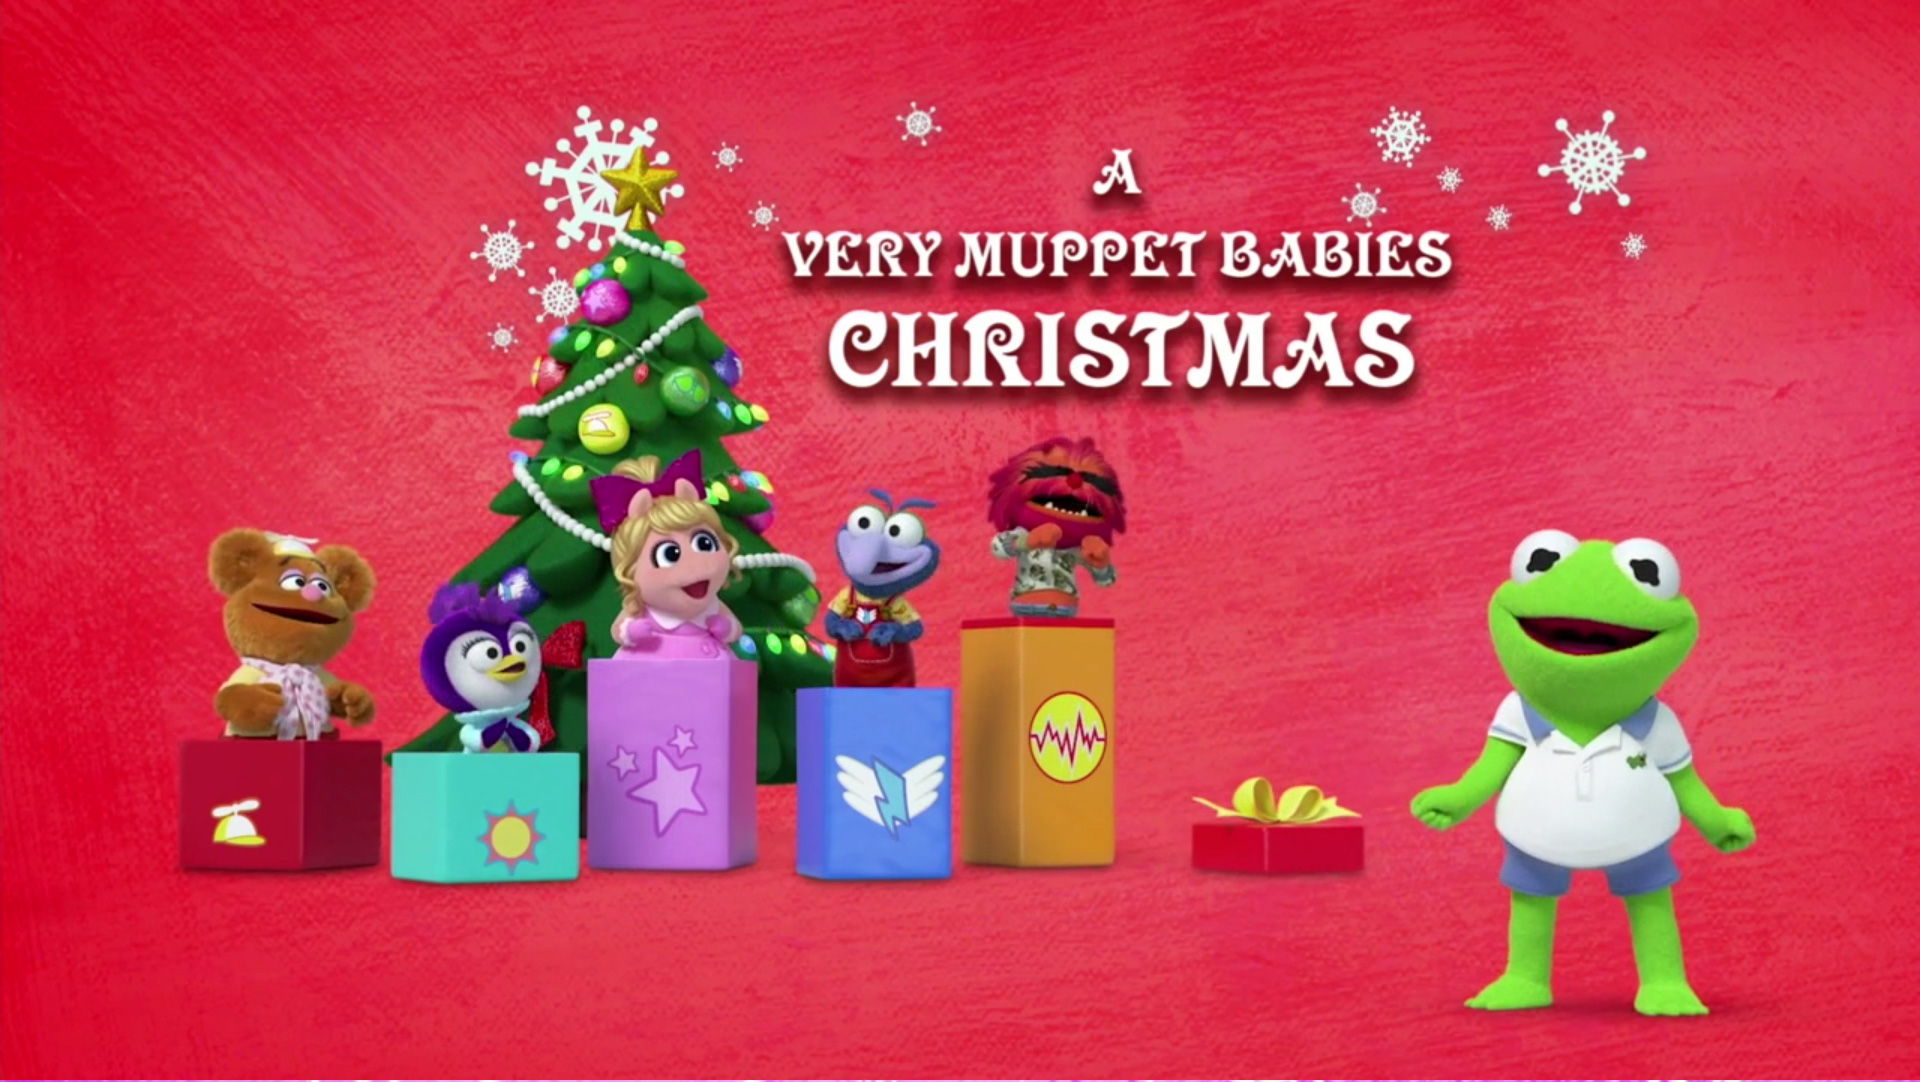 A Very Muppet Babies Christmas Disney Wiki FANDOM powered by Wikia